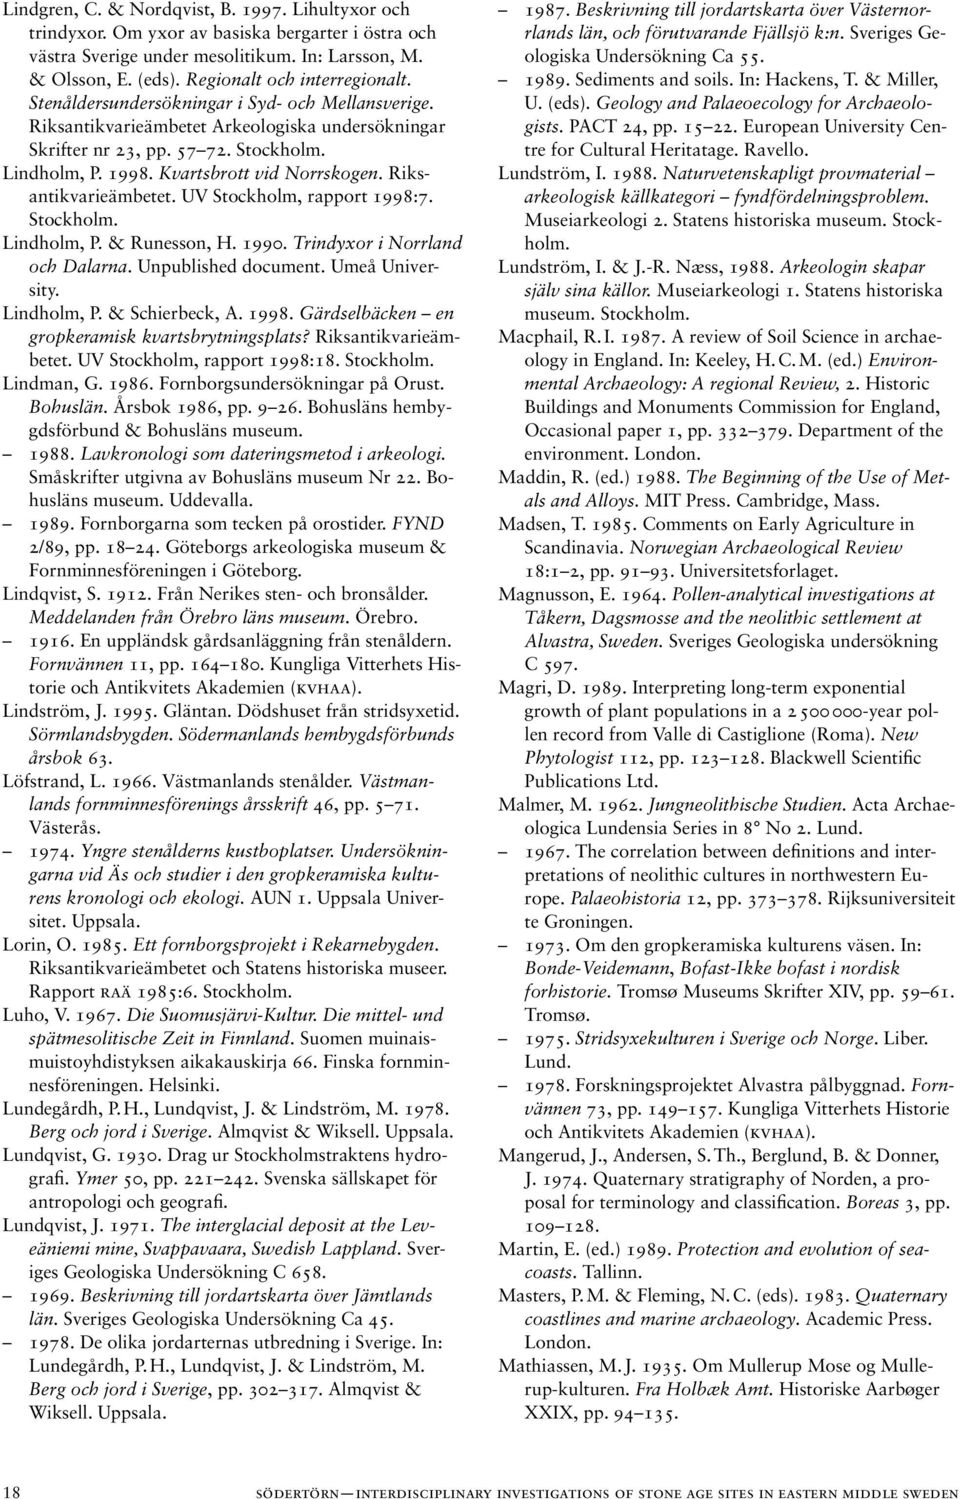 Kvartsbrott vid Norrskogen. Riksantikvarieämbetet. UV Stockholm, rapport 1998:7. Lindholm, P. & Runesson, H. 1990. Trindyxor i Norrland och Dalarna. Unpublished document. Umeå University. Lindholm, P. & Schierbeck, A.